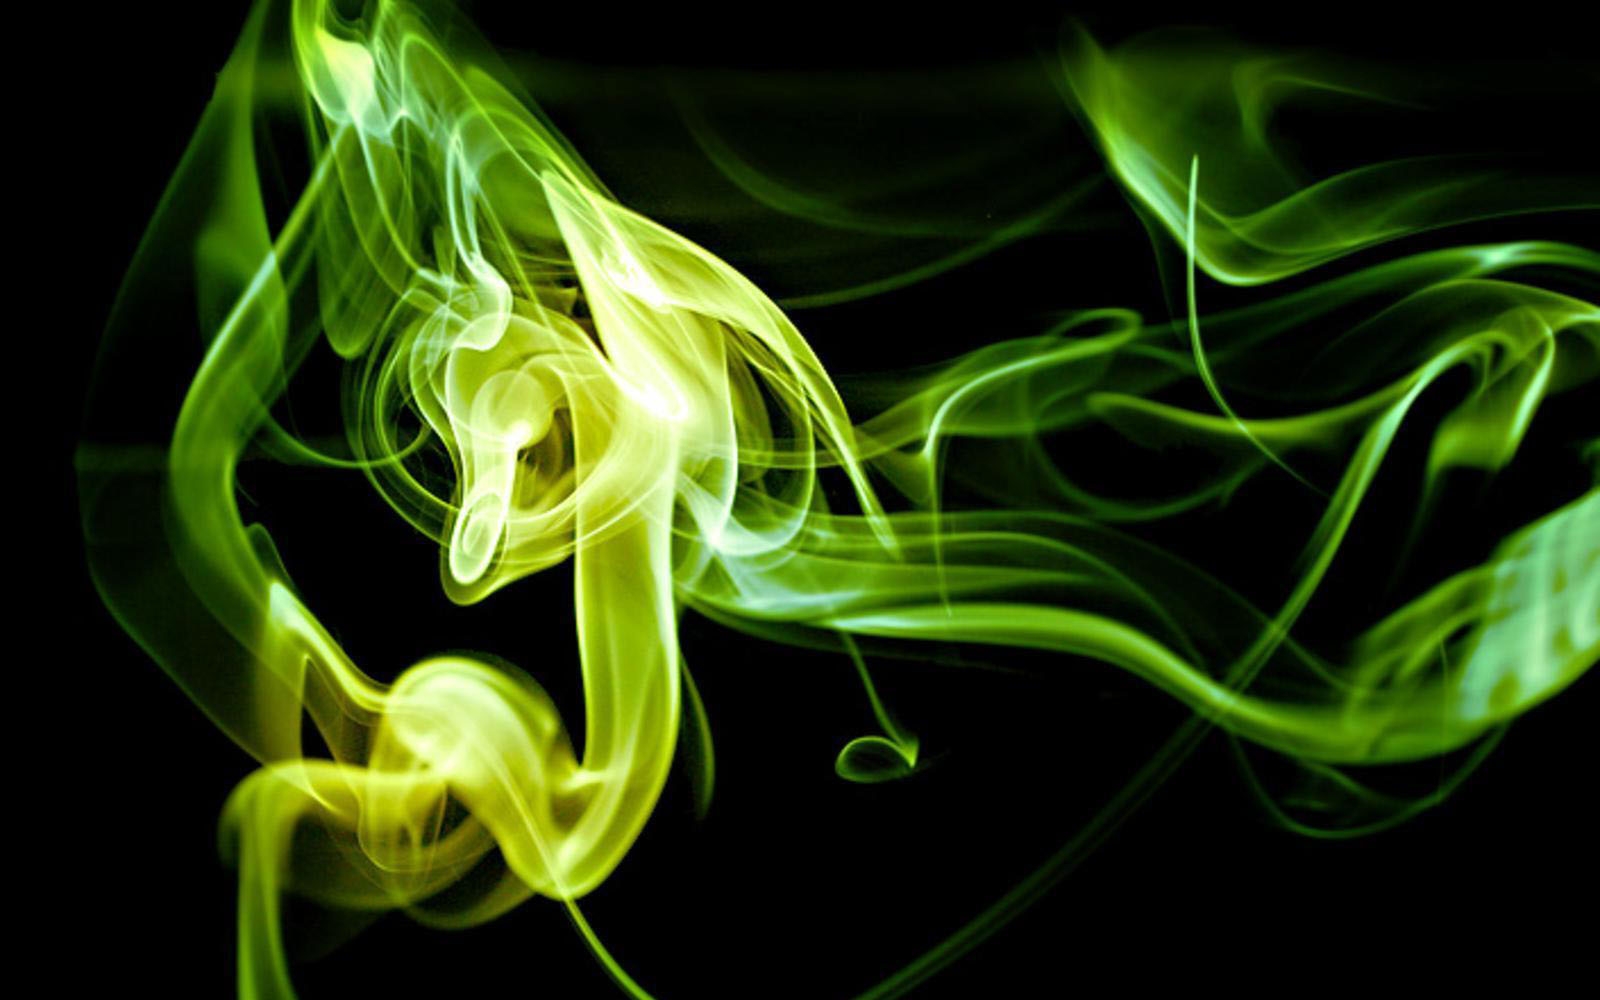  smoke wallpapers abstract smoke desktop wallpapers abstract smoke